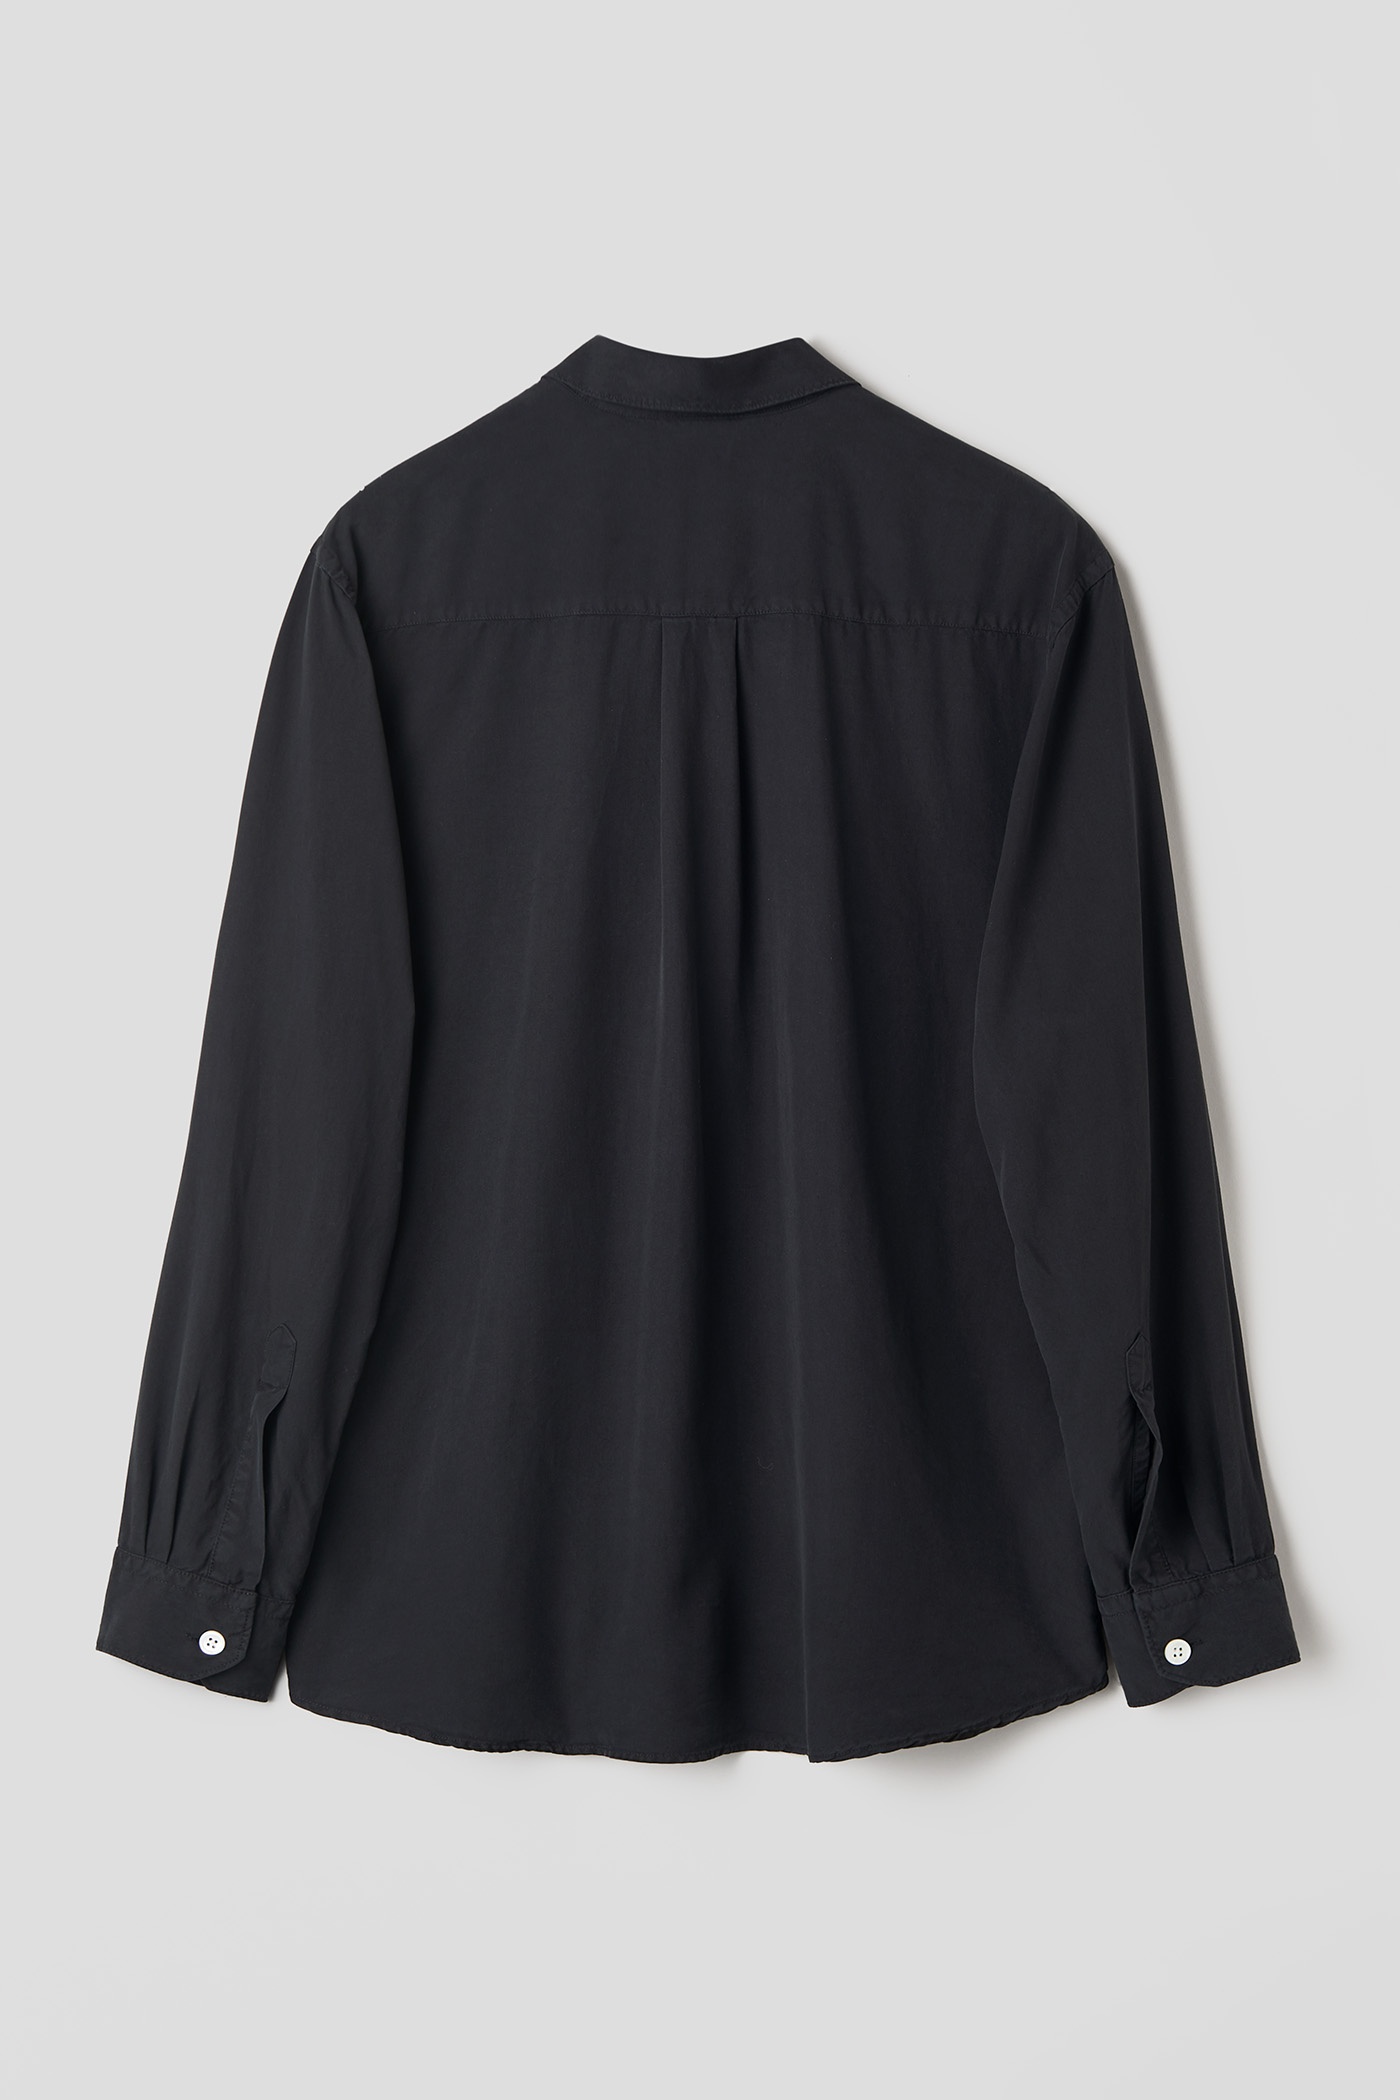 Initial Shirt Black Fine Silk - 6